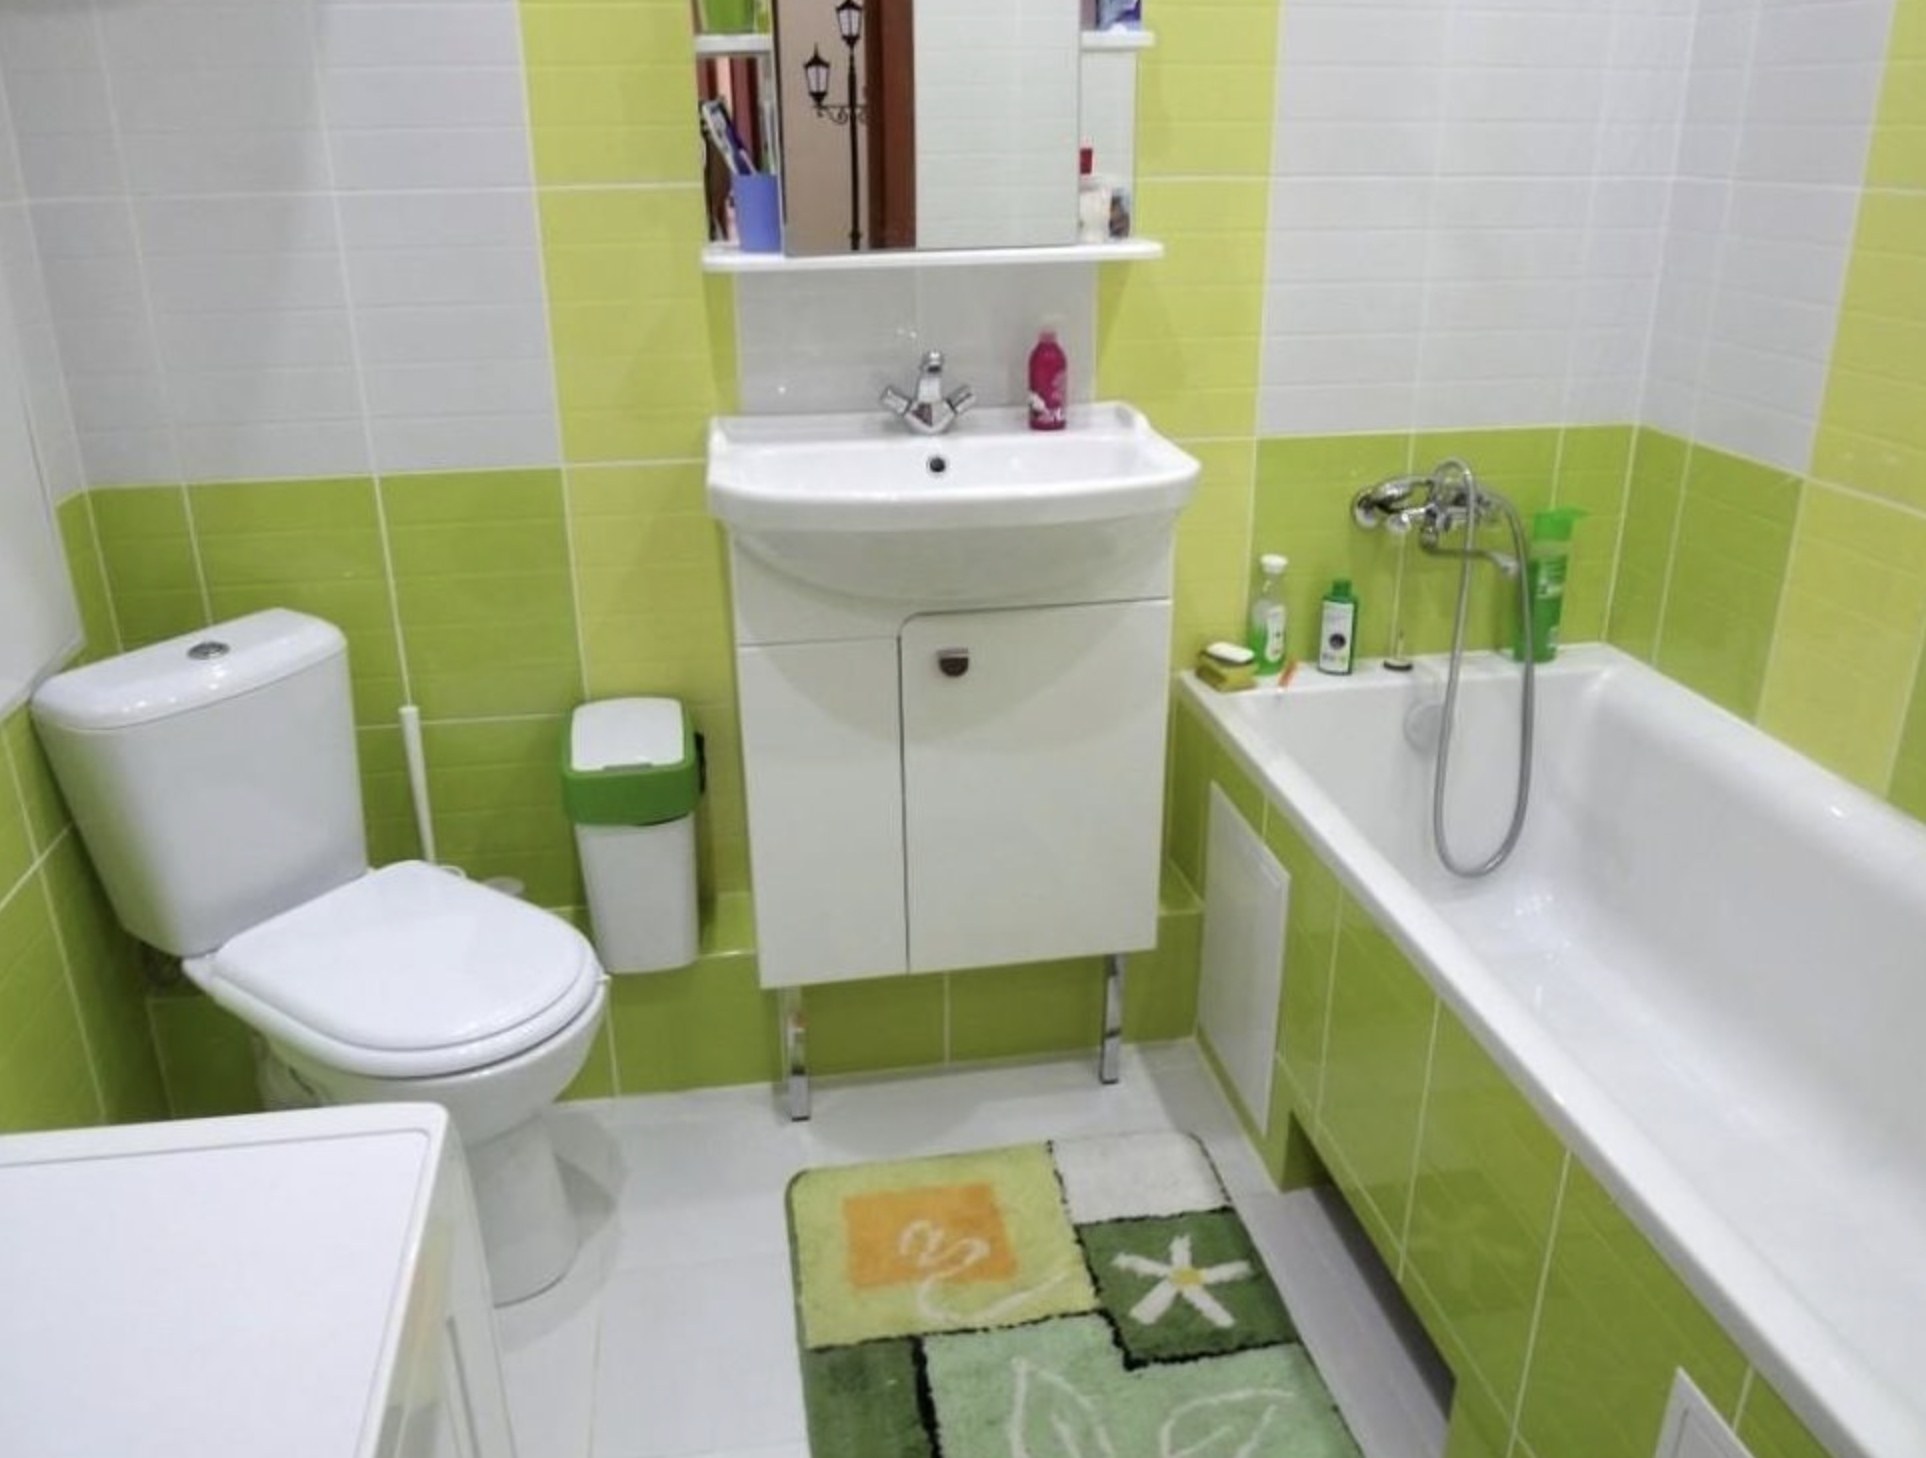 Хрущевка ванная комната совмещенная с туалетом. Ванная с туалетом. Ванная комната совмещенная с туалетом. Маленькая совмещенная ванная. Ванная в зеленых тонах.